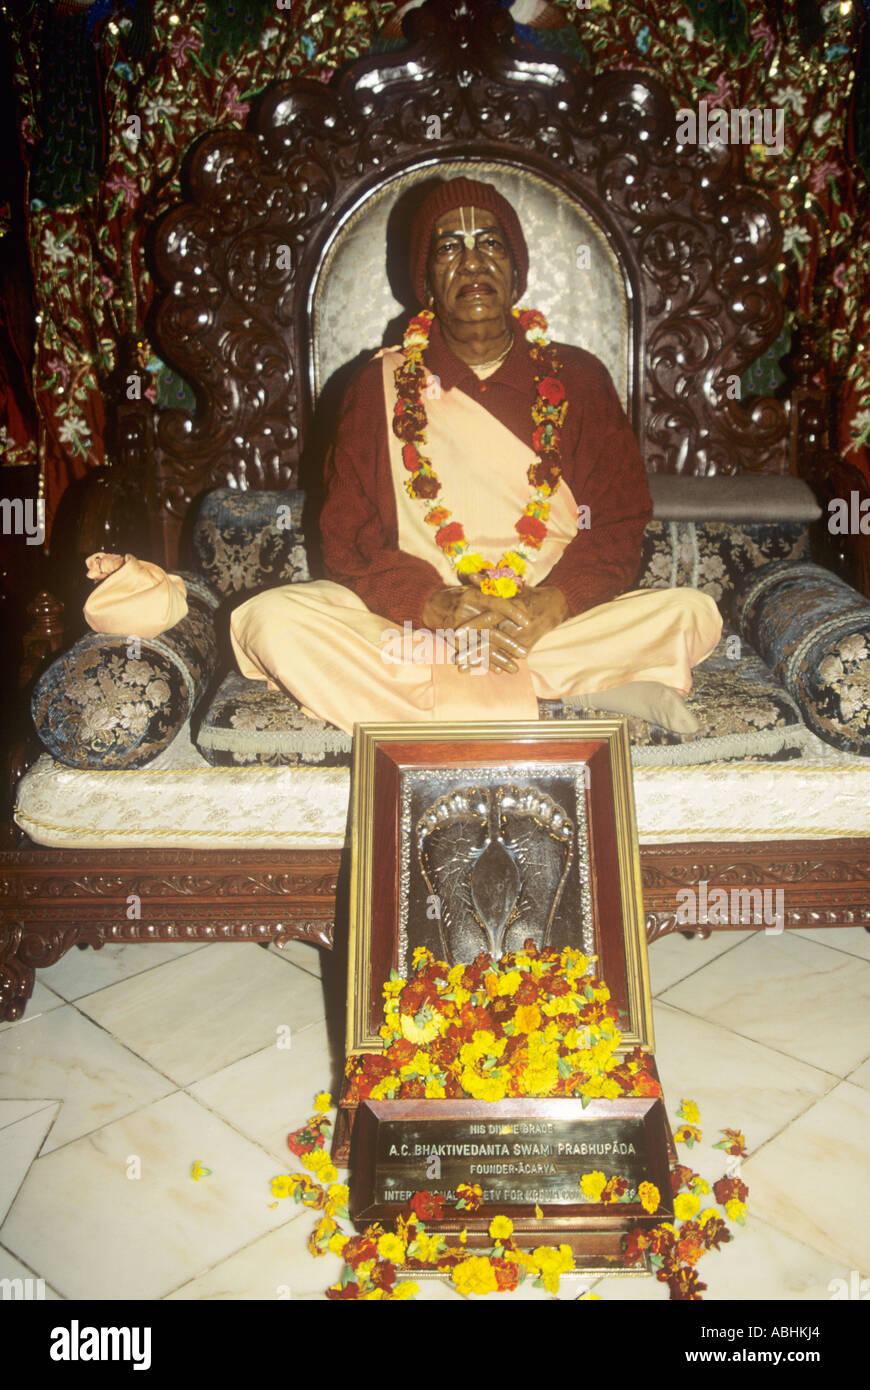 Statue of His Divine Grace A.C. Bhaktivedanta Swami Prabhupada,  founder of the Krishna movement in 1966, Watford, UK Stock Photo